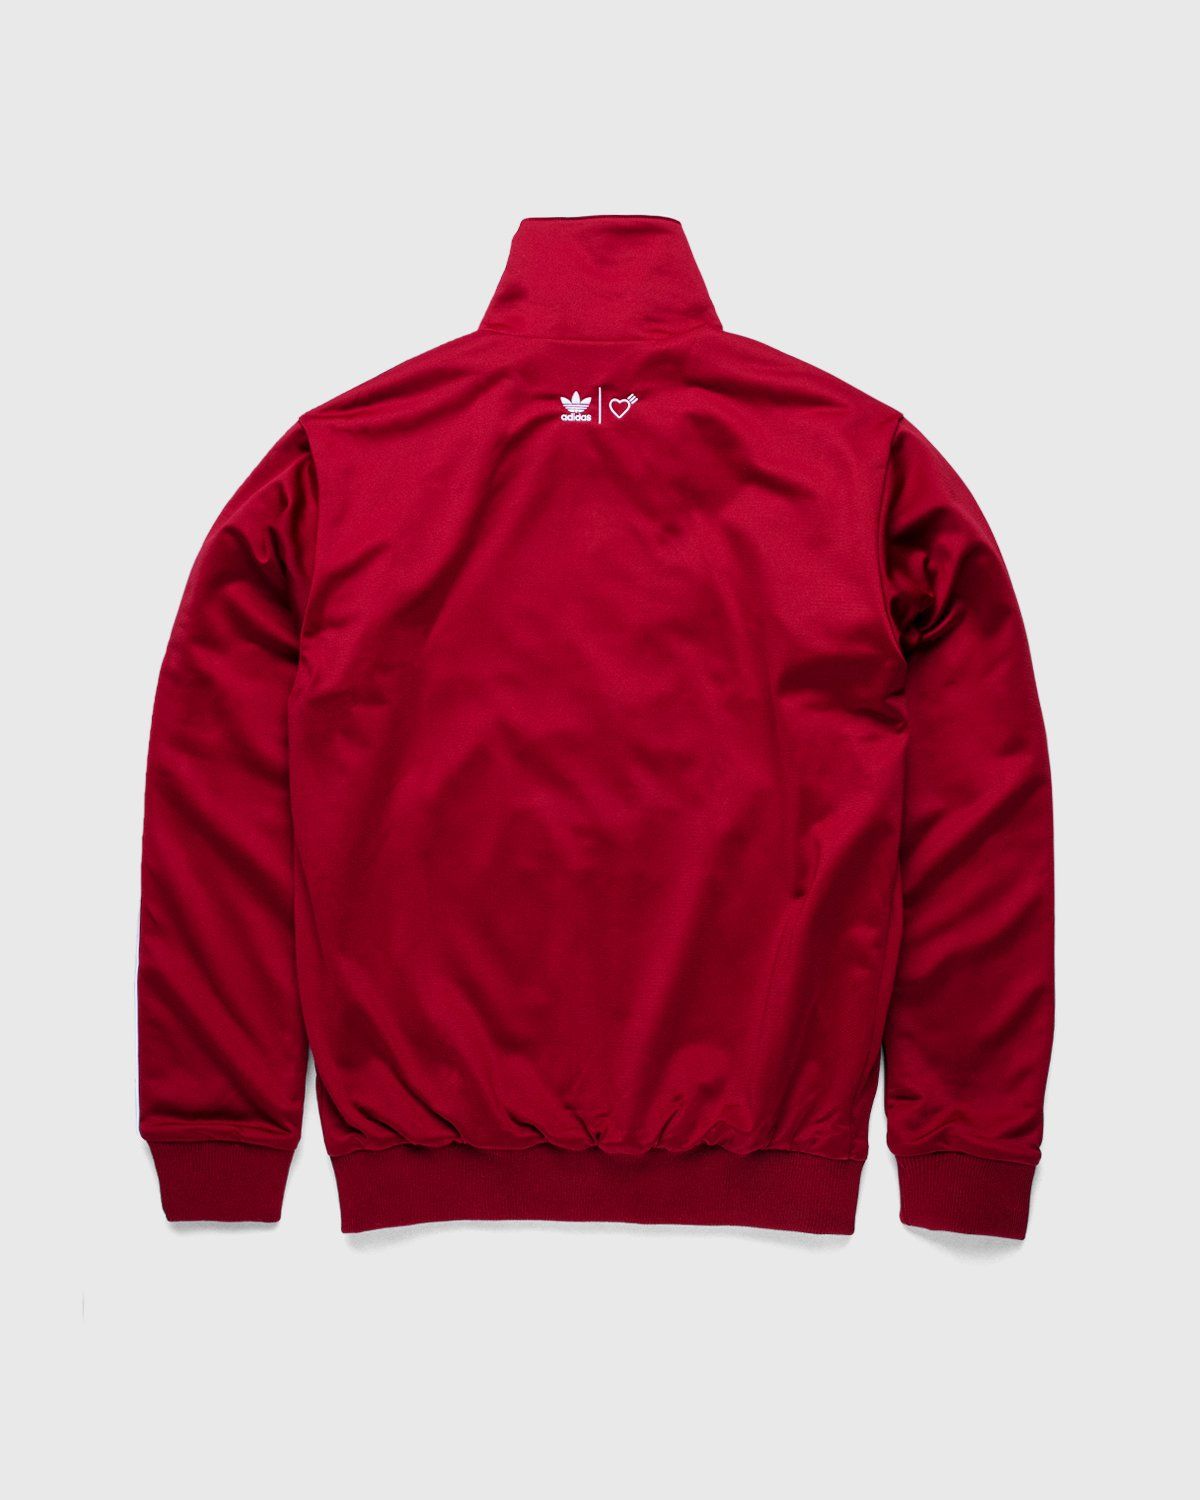 adidas Originals x Human Made – Firebird Track Top Burgundy - Track Jackets - Red - Image 3